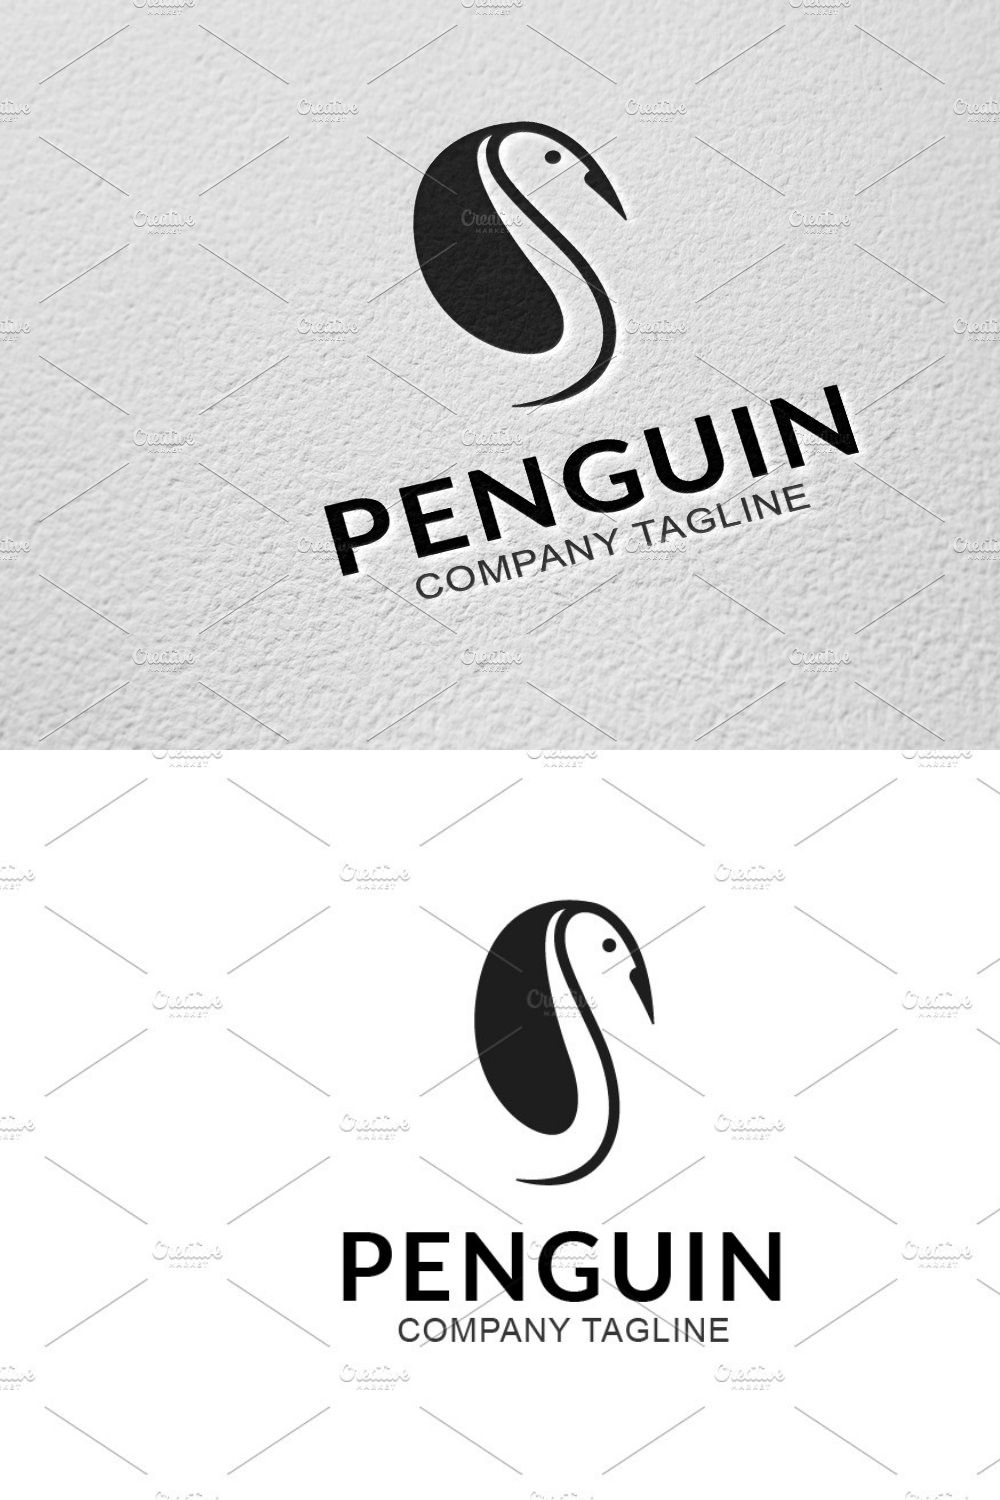 Penguin pinterest preview image.